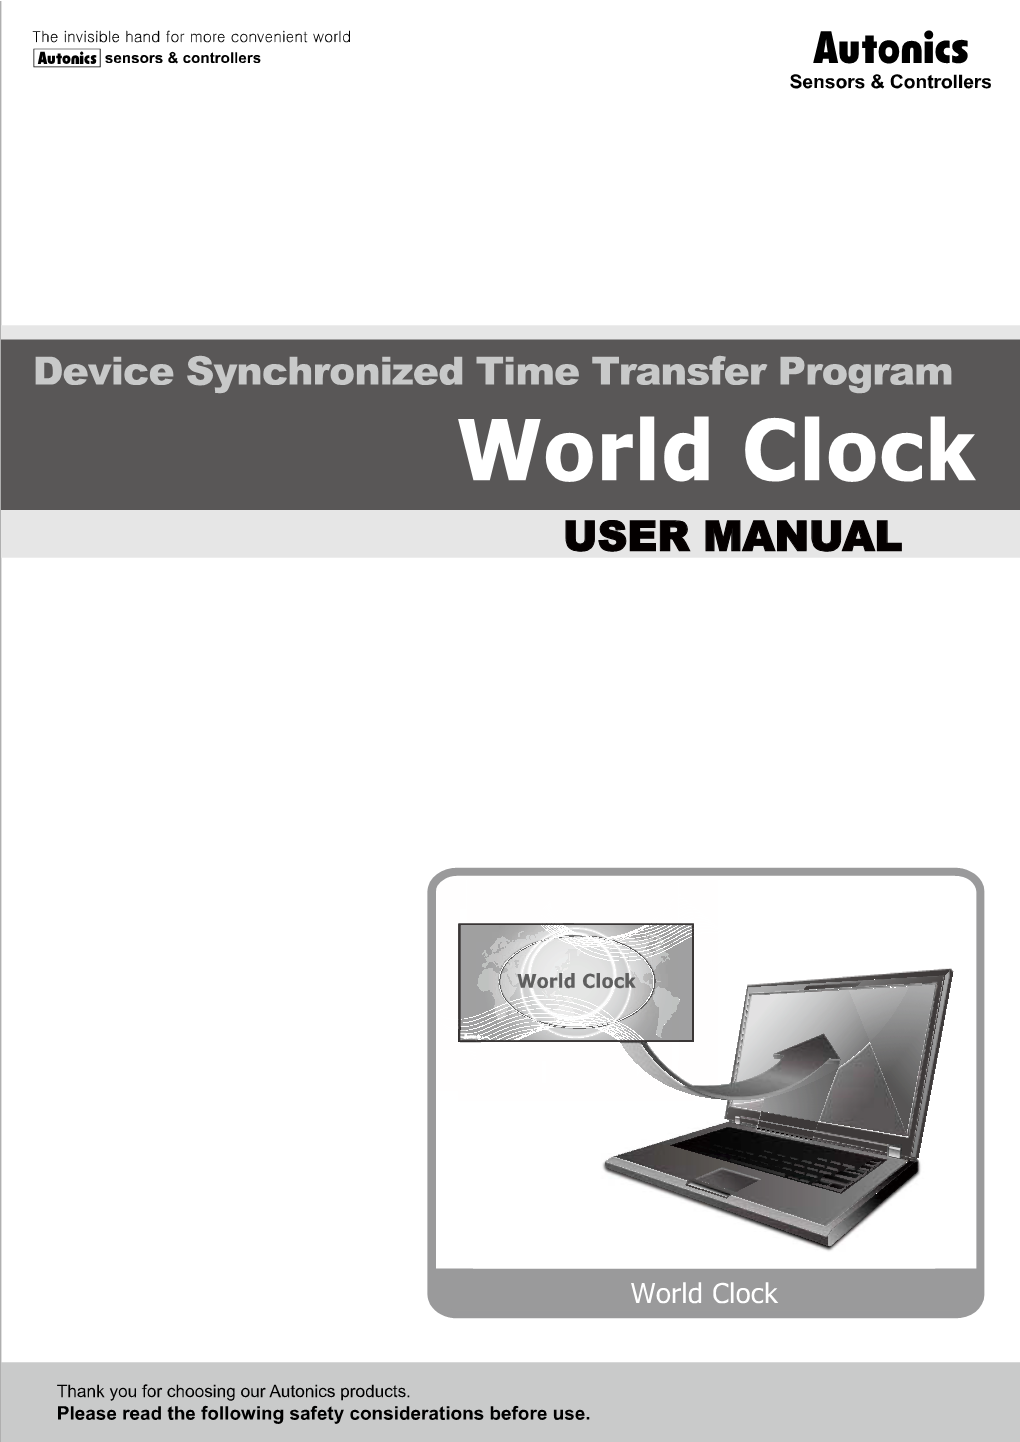 World Clock (User Manual)